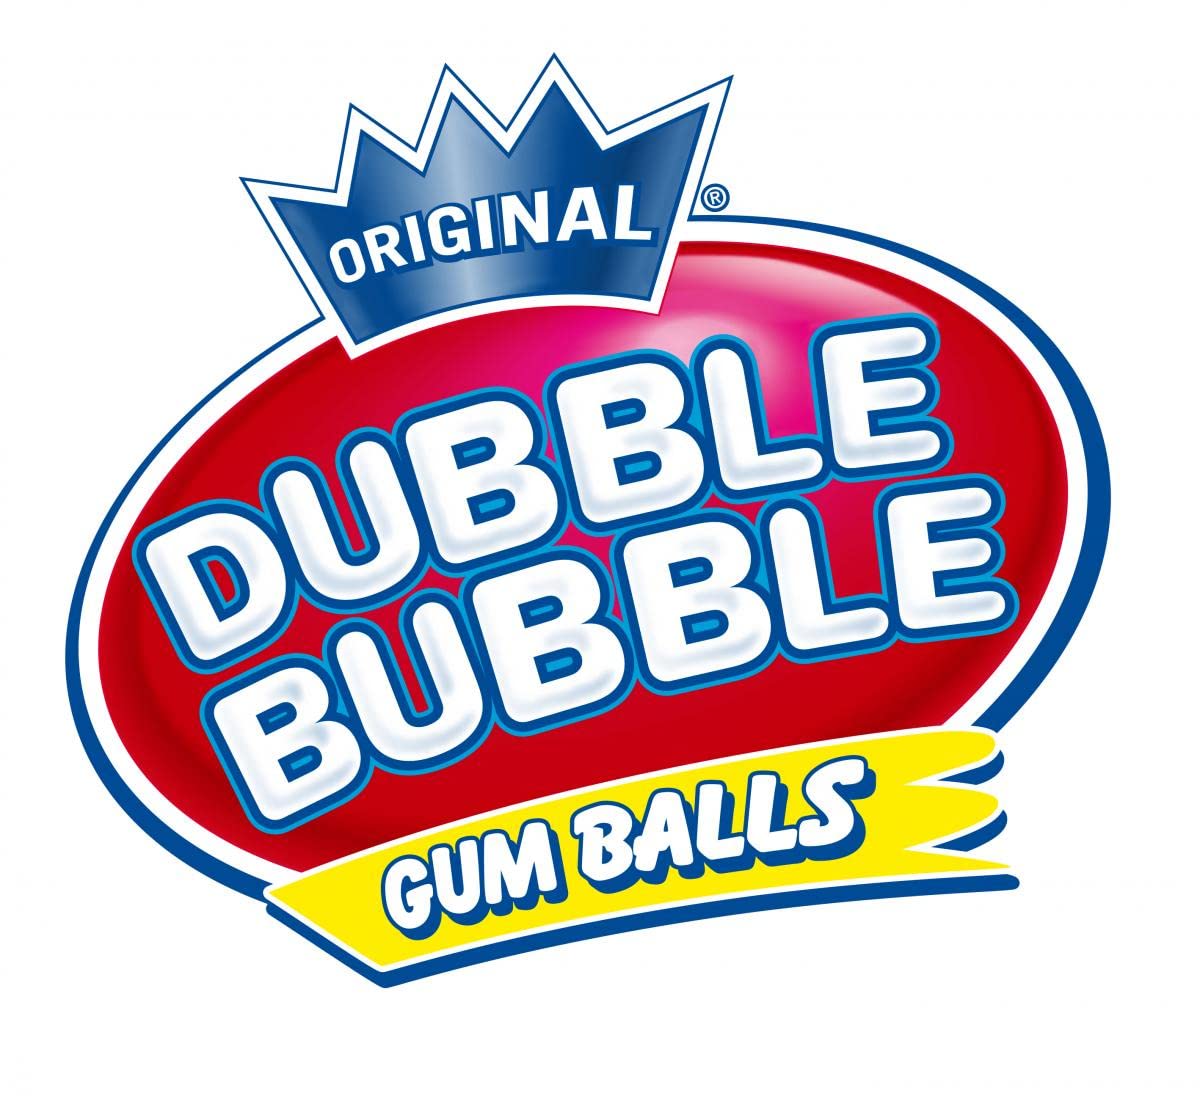 Dubble Bubble Birthday Cake Flavor Bubblegum Gumballs 3 Lbs American Candy Assorted Mix Bulk Bag (48 Oz)